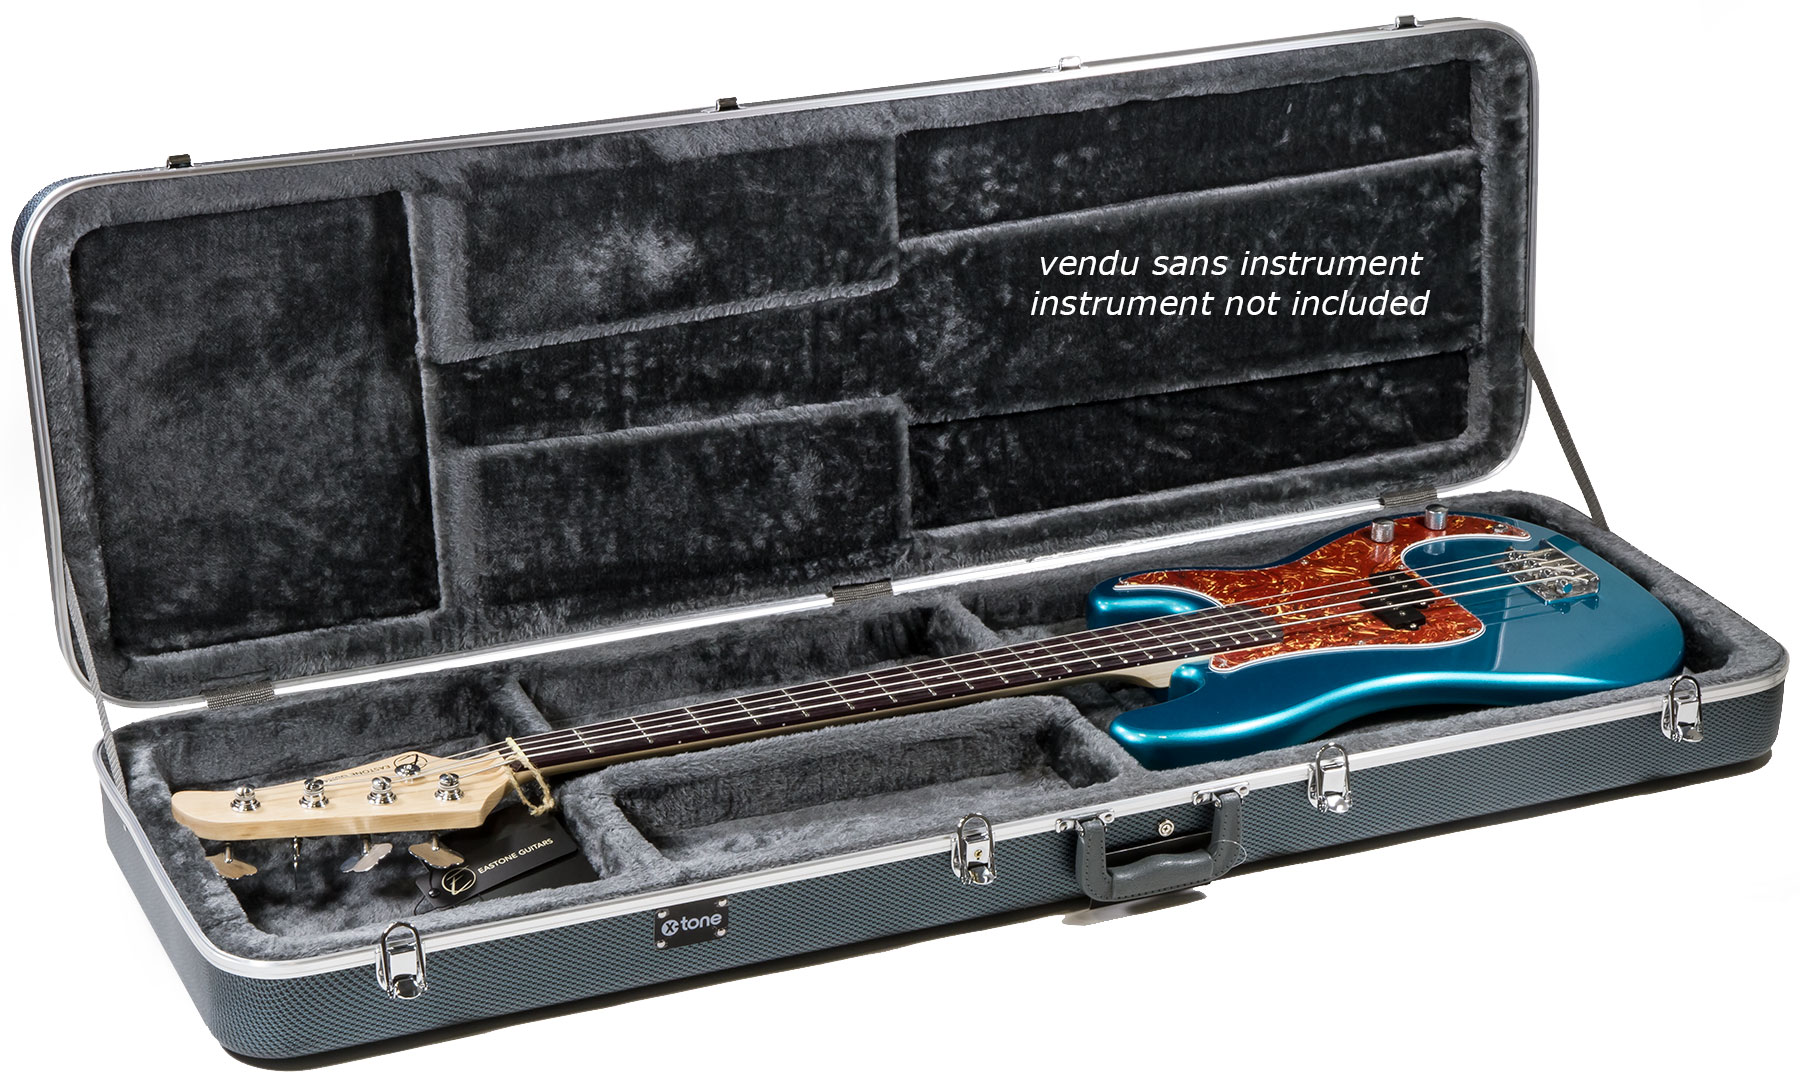 X-tone 1511 Abs Electrique Jazz/precision Bass Rectangulaire Silver - Electric bass case - Variation 2